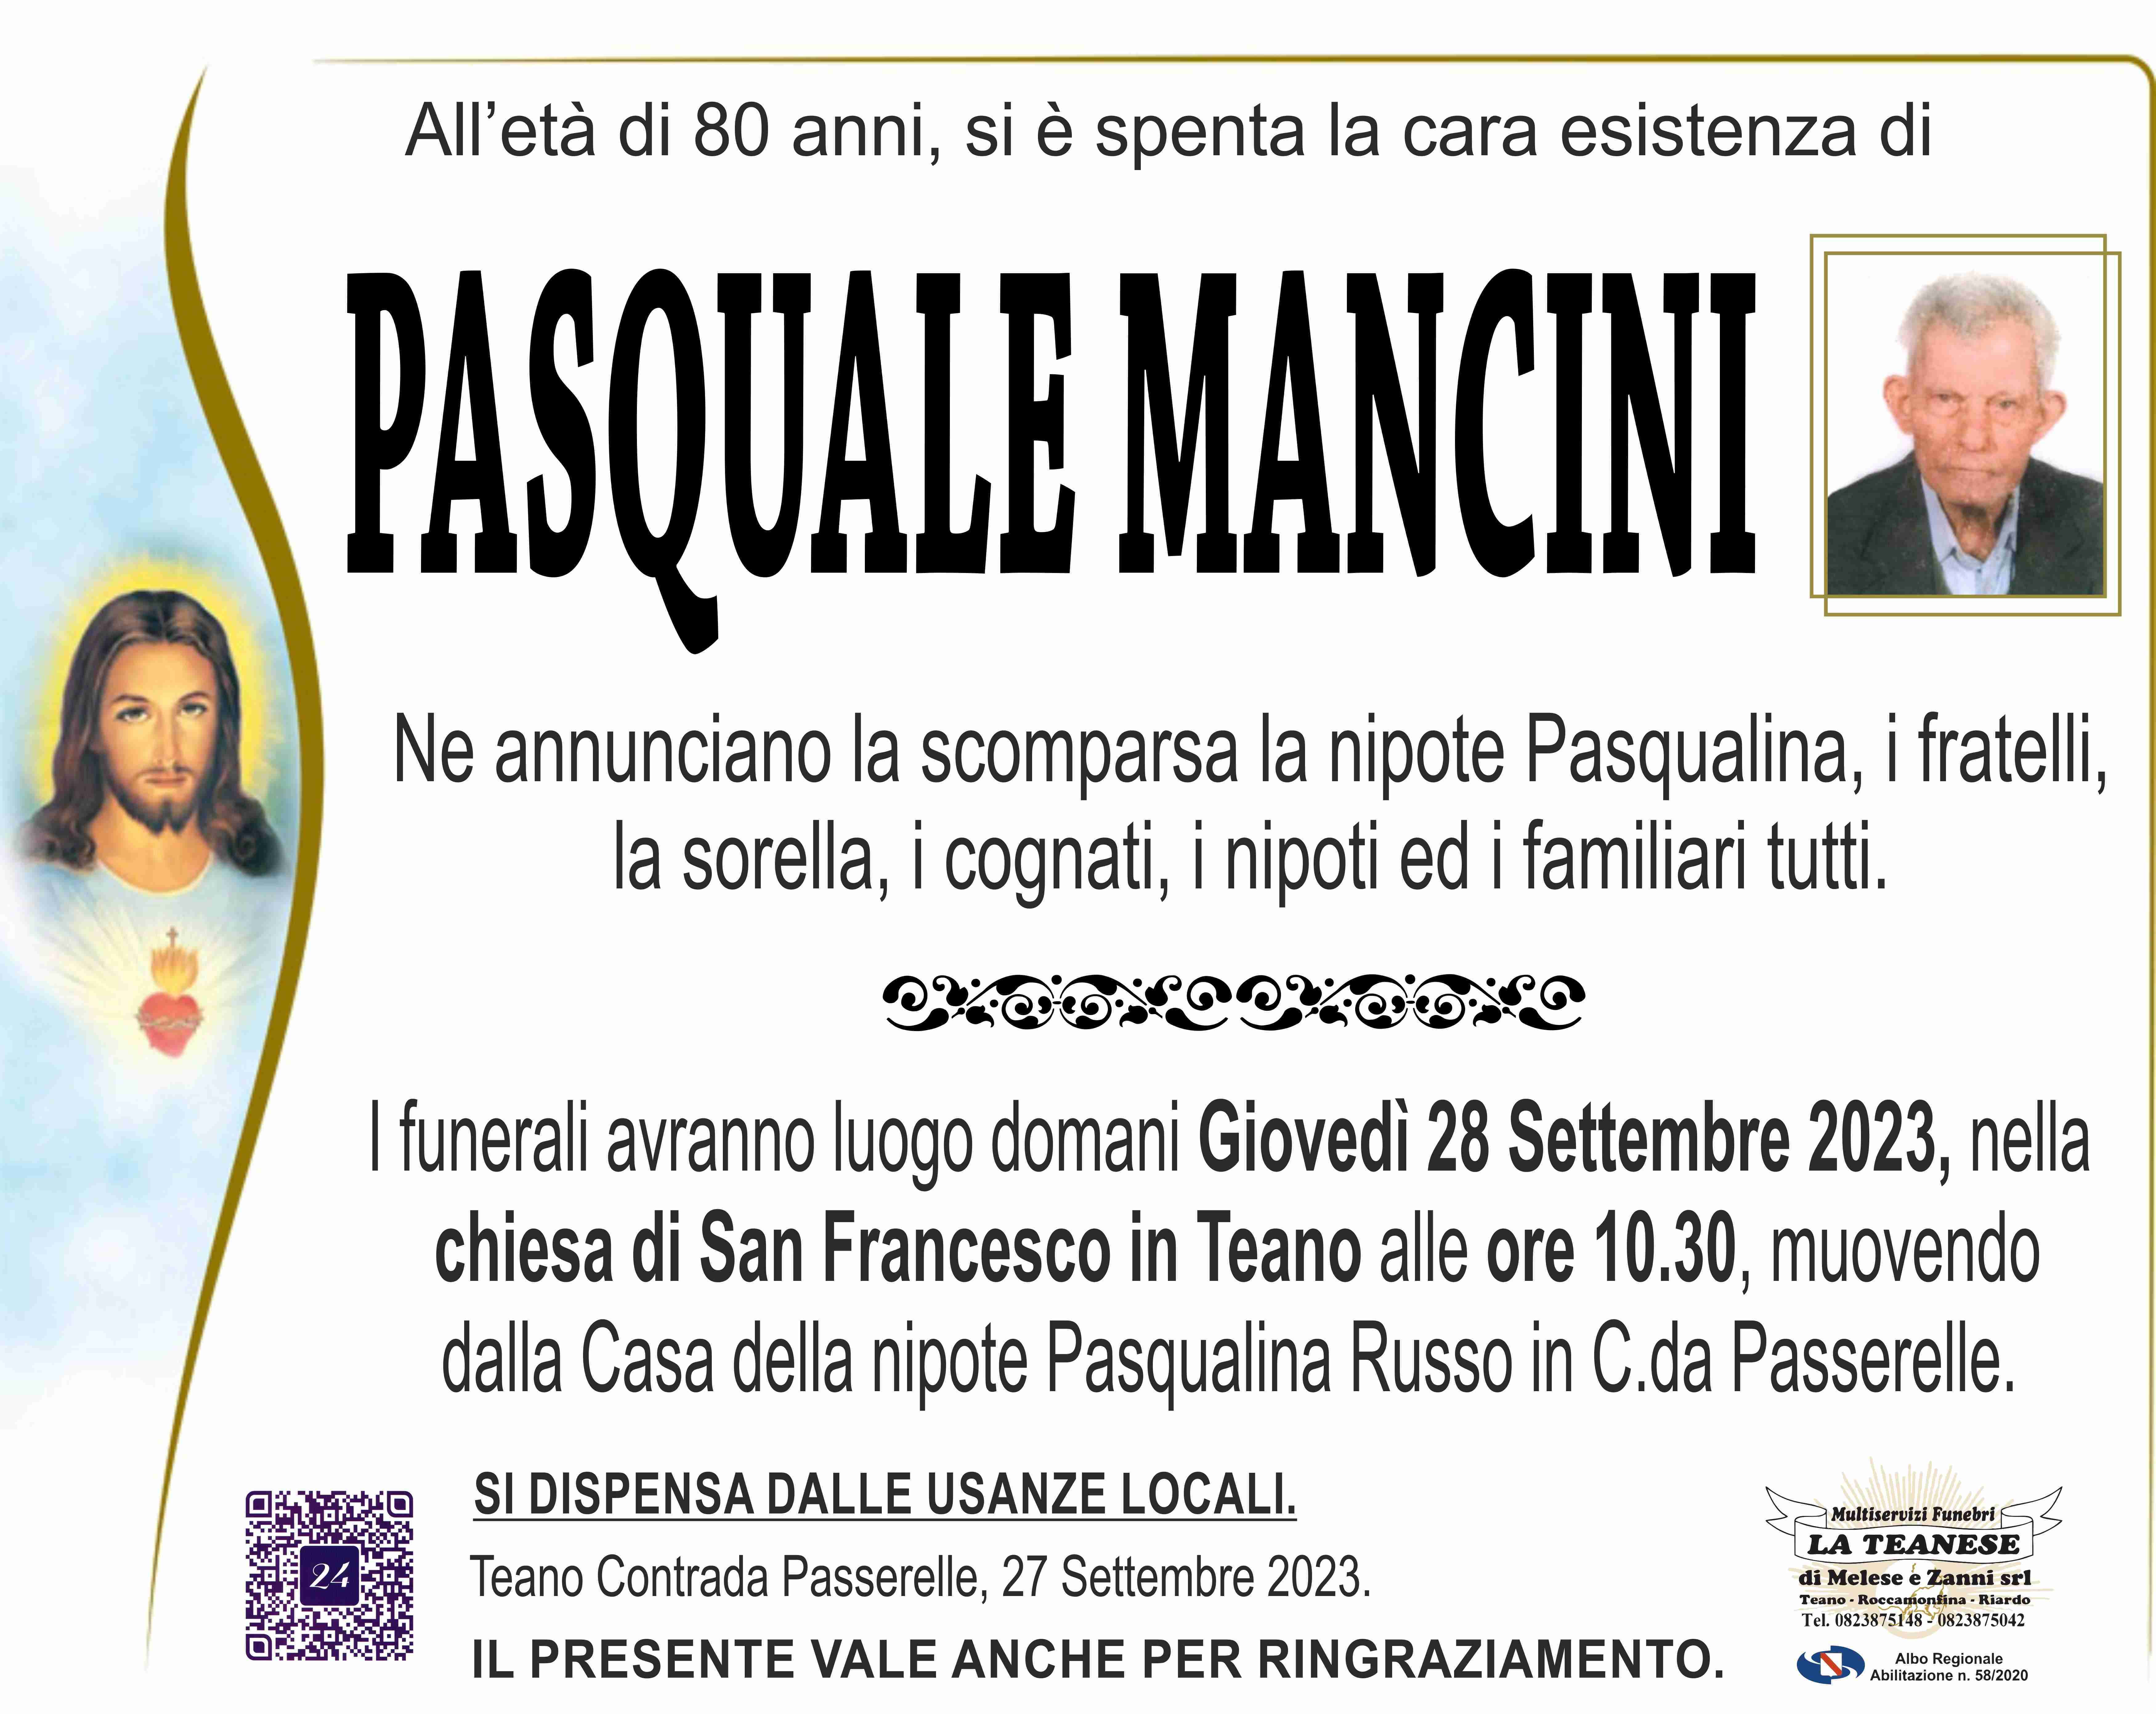 Pasquale Mancini